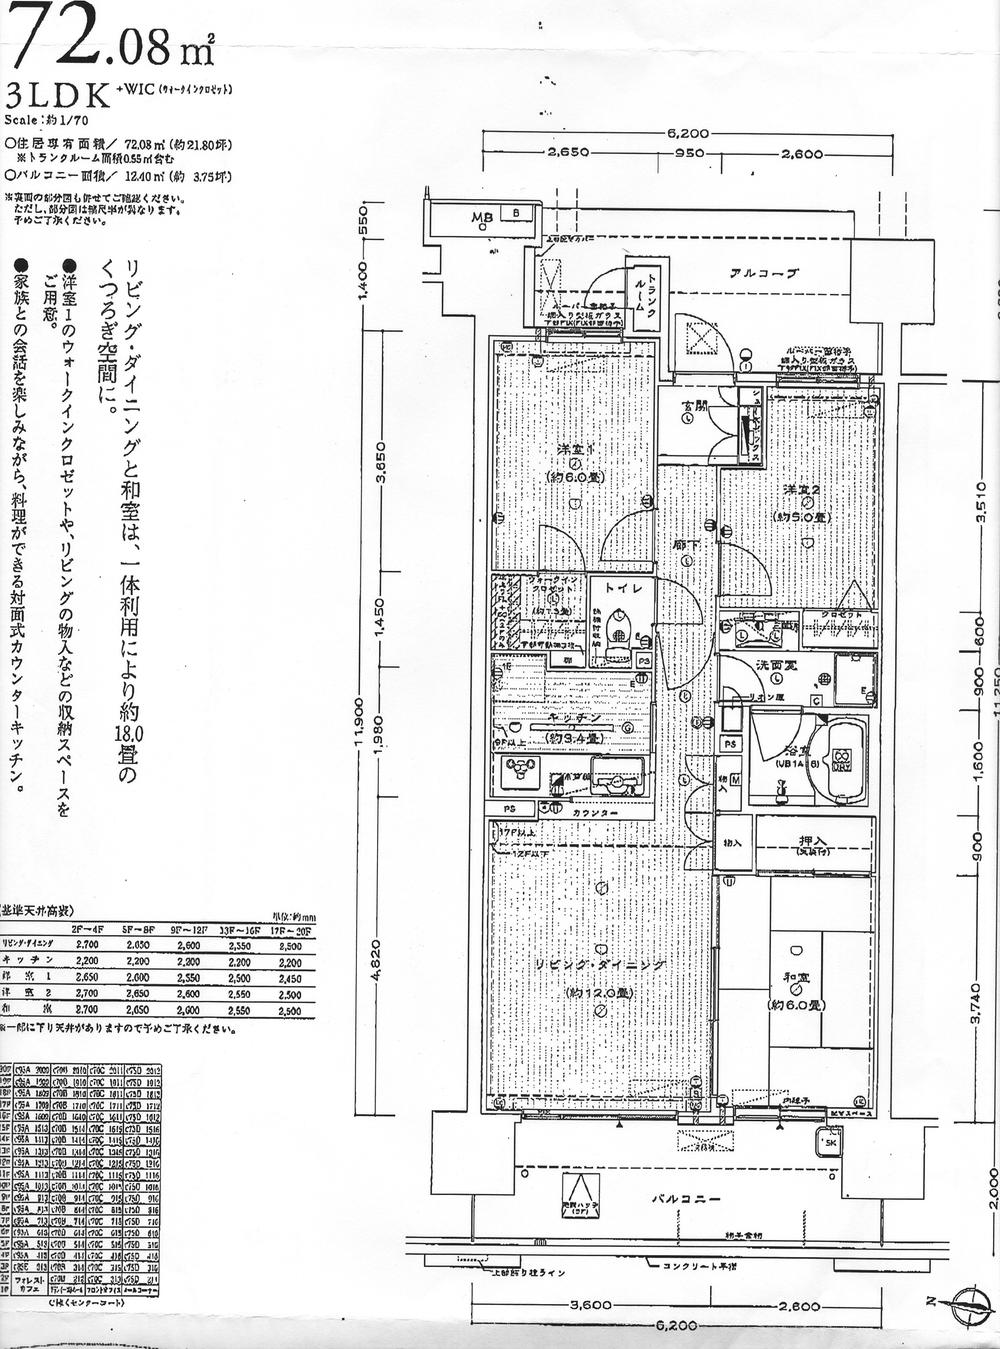 Floor plan. 3LDK, Price 36,750,000 yen, Occupied area 72.08 sq m , Balcony area 4 sq m